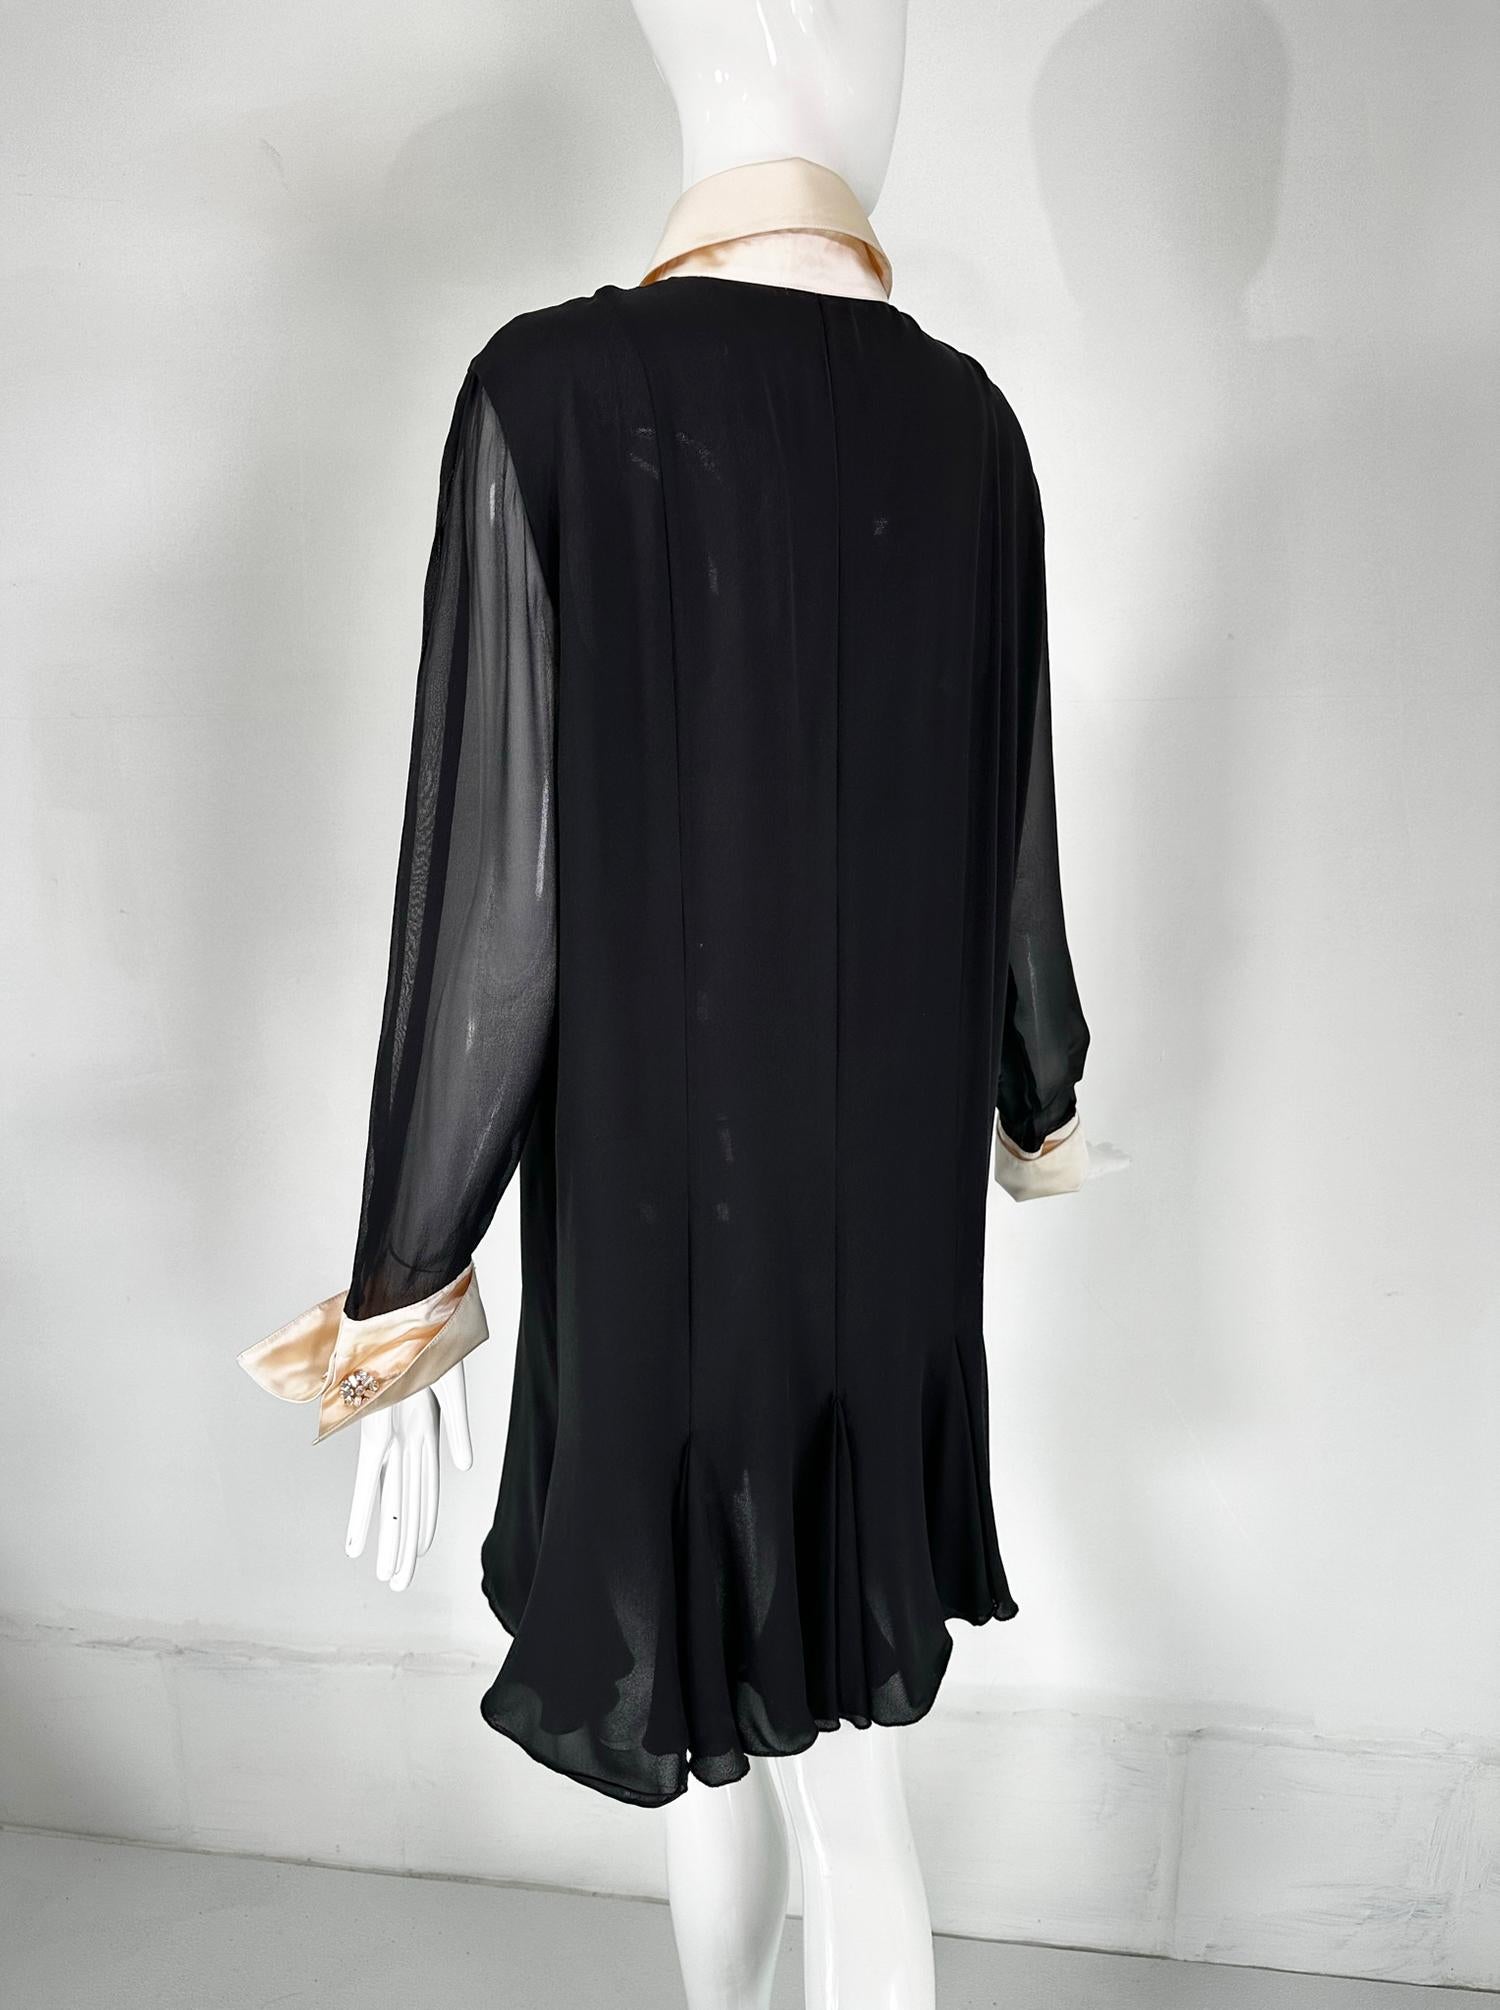 Christian Lacroix Black Silk Chiffon Dress With Off White Silk Collar & Cuffs  For Sale 2